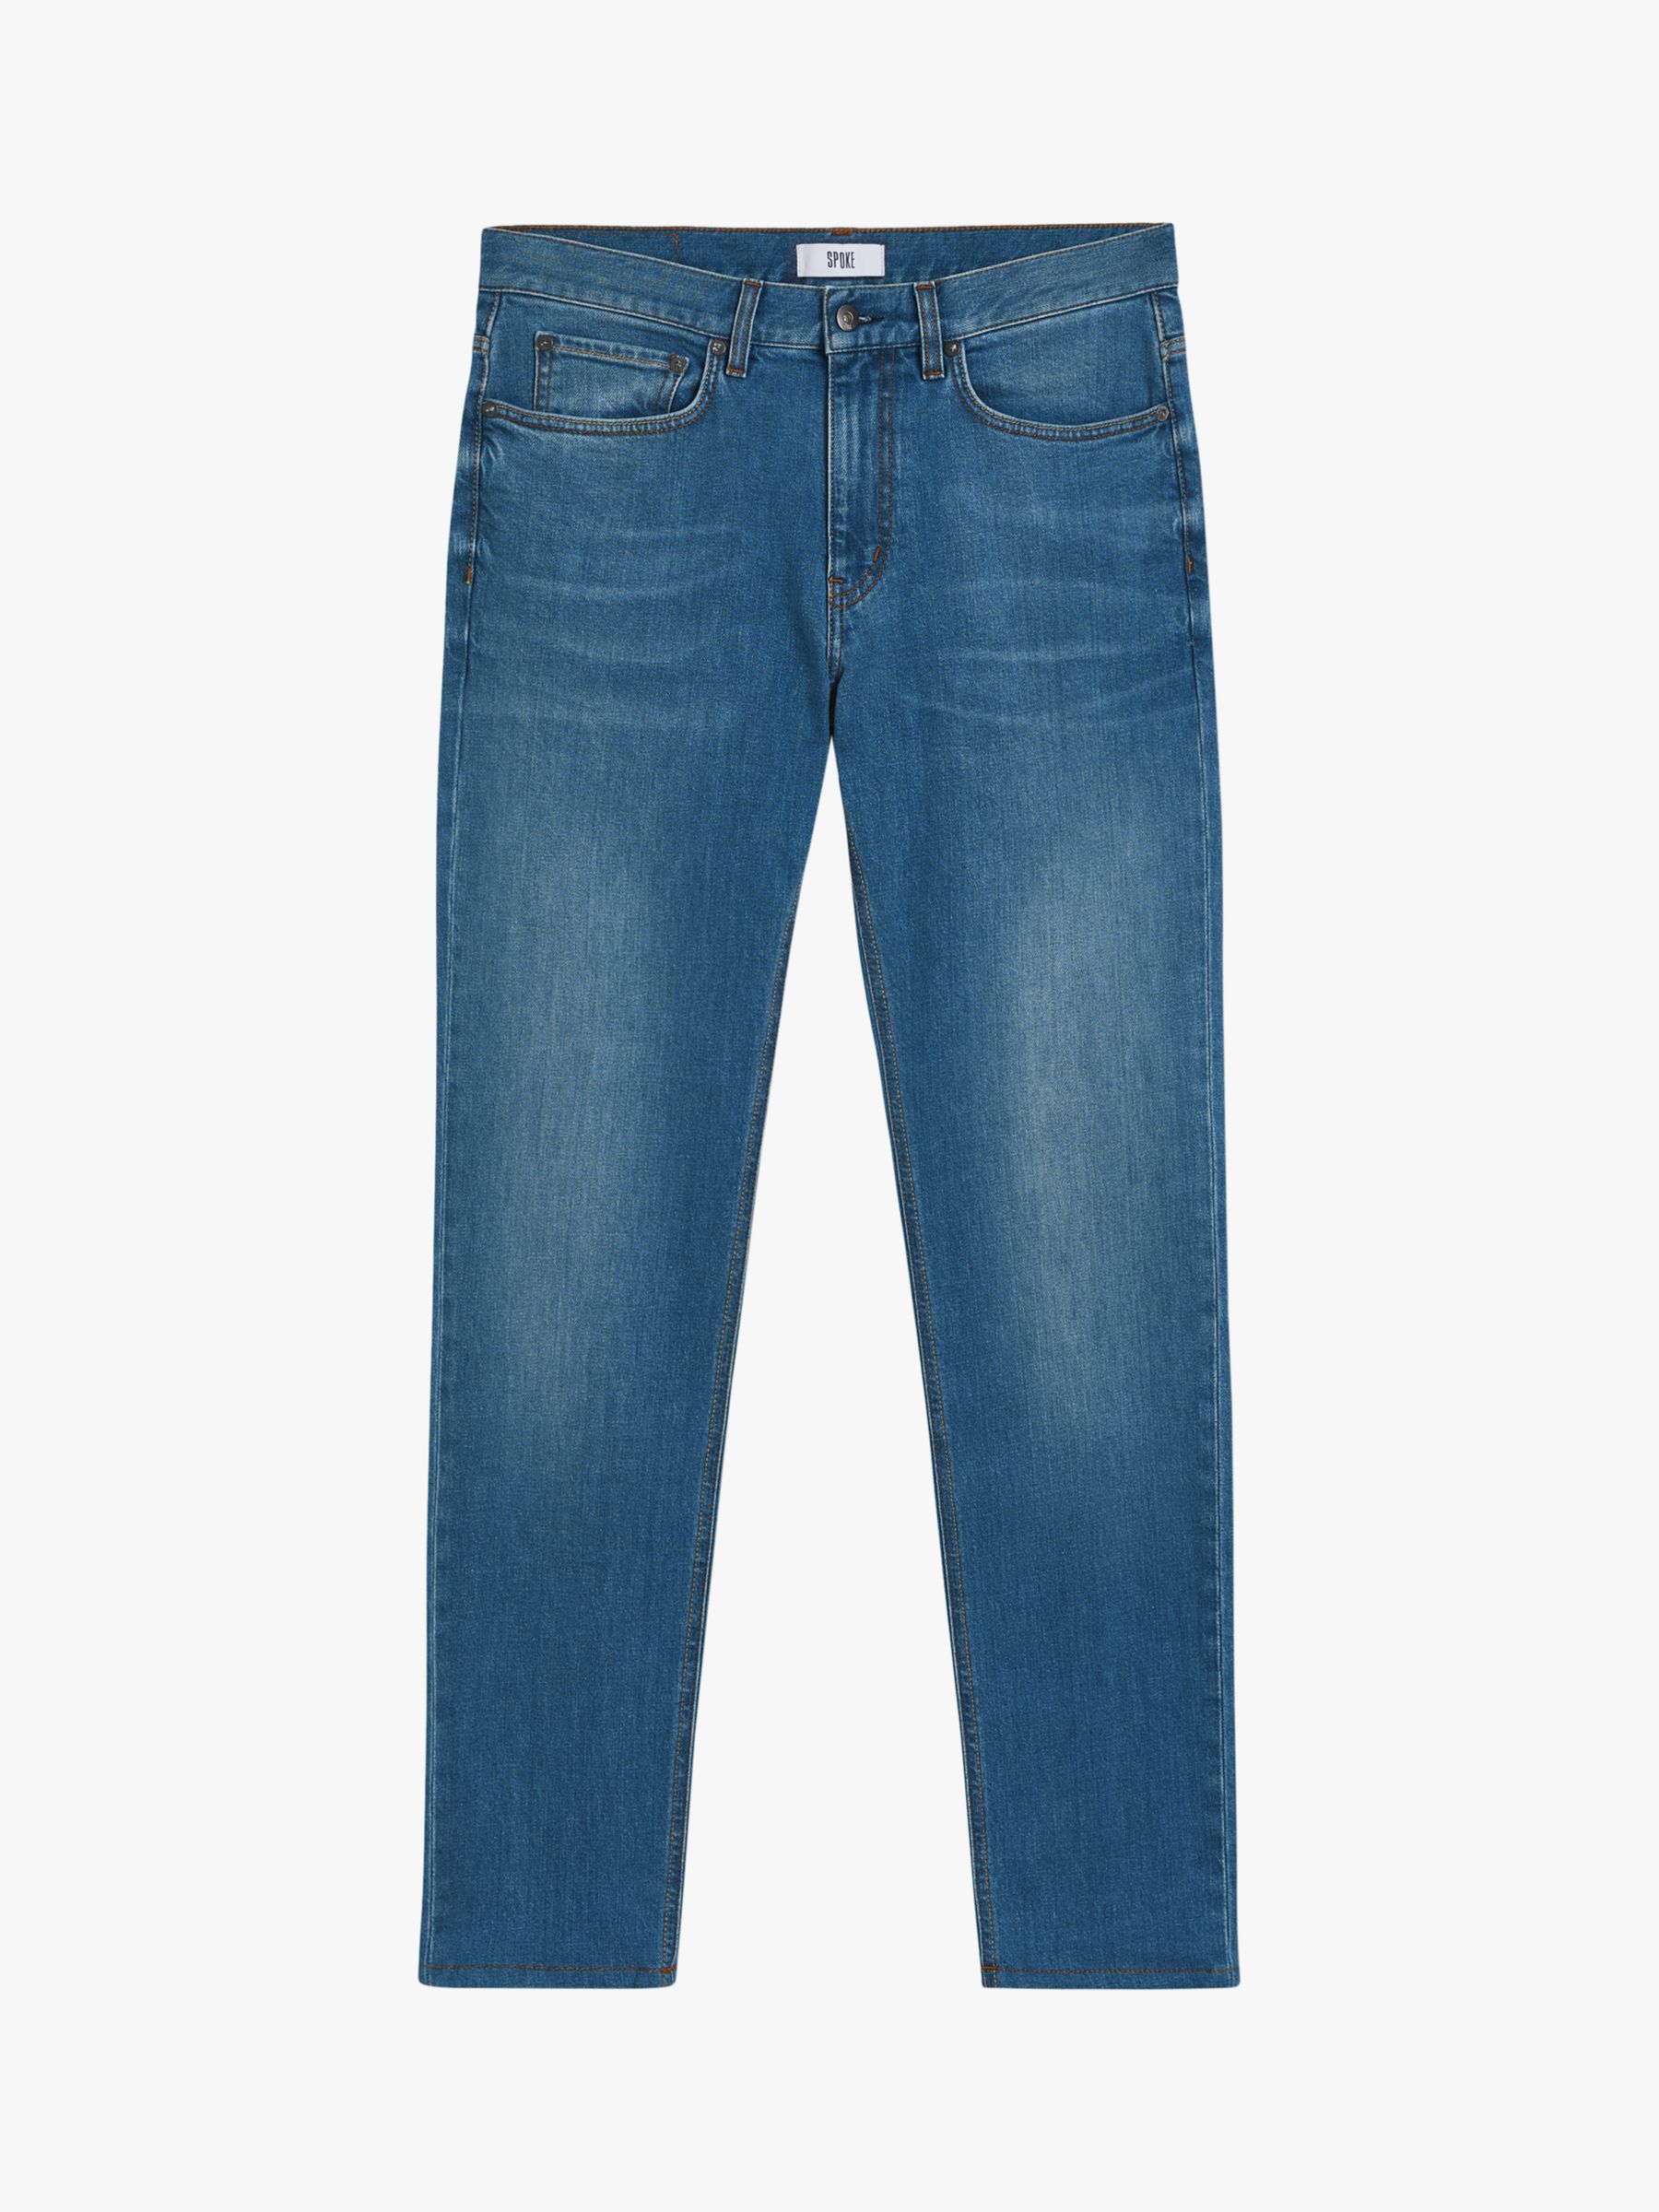 SPOKE Italian Denim Narrow Thigh Jeans, Denim Blue at John Lewis & Partners